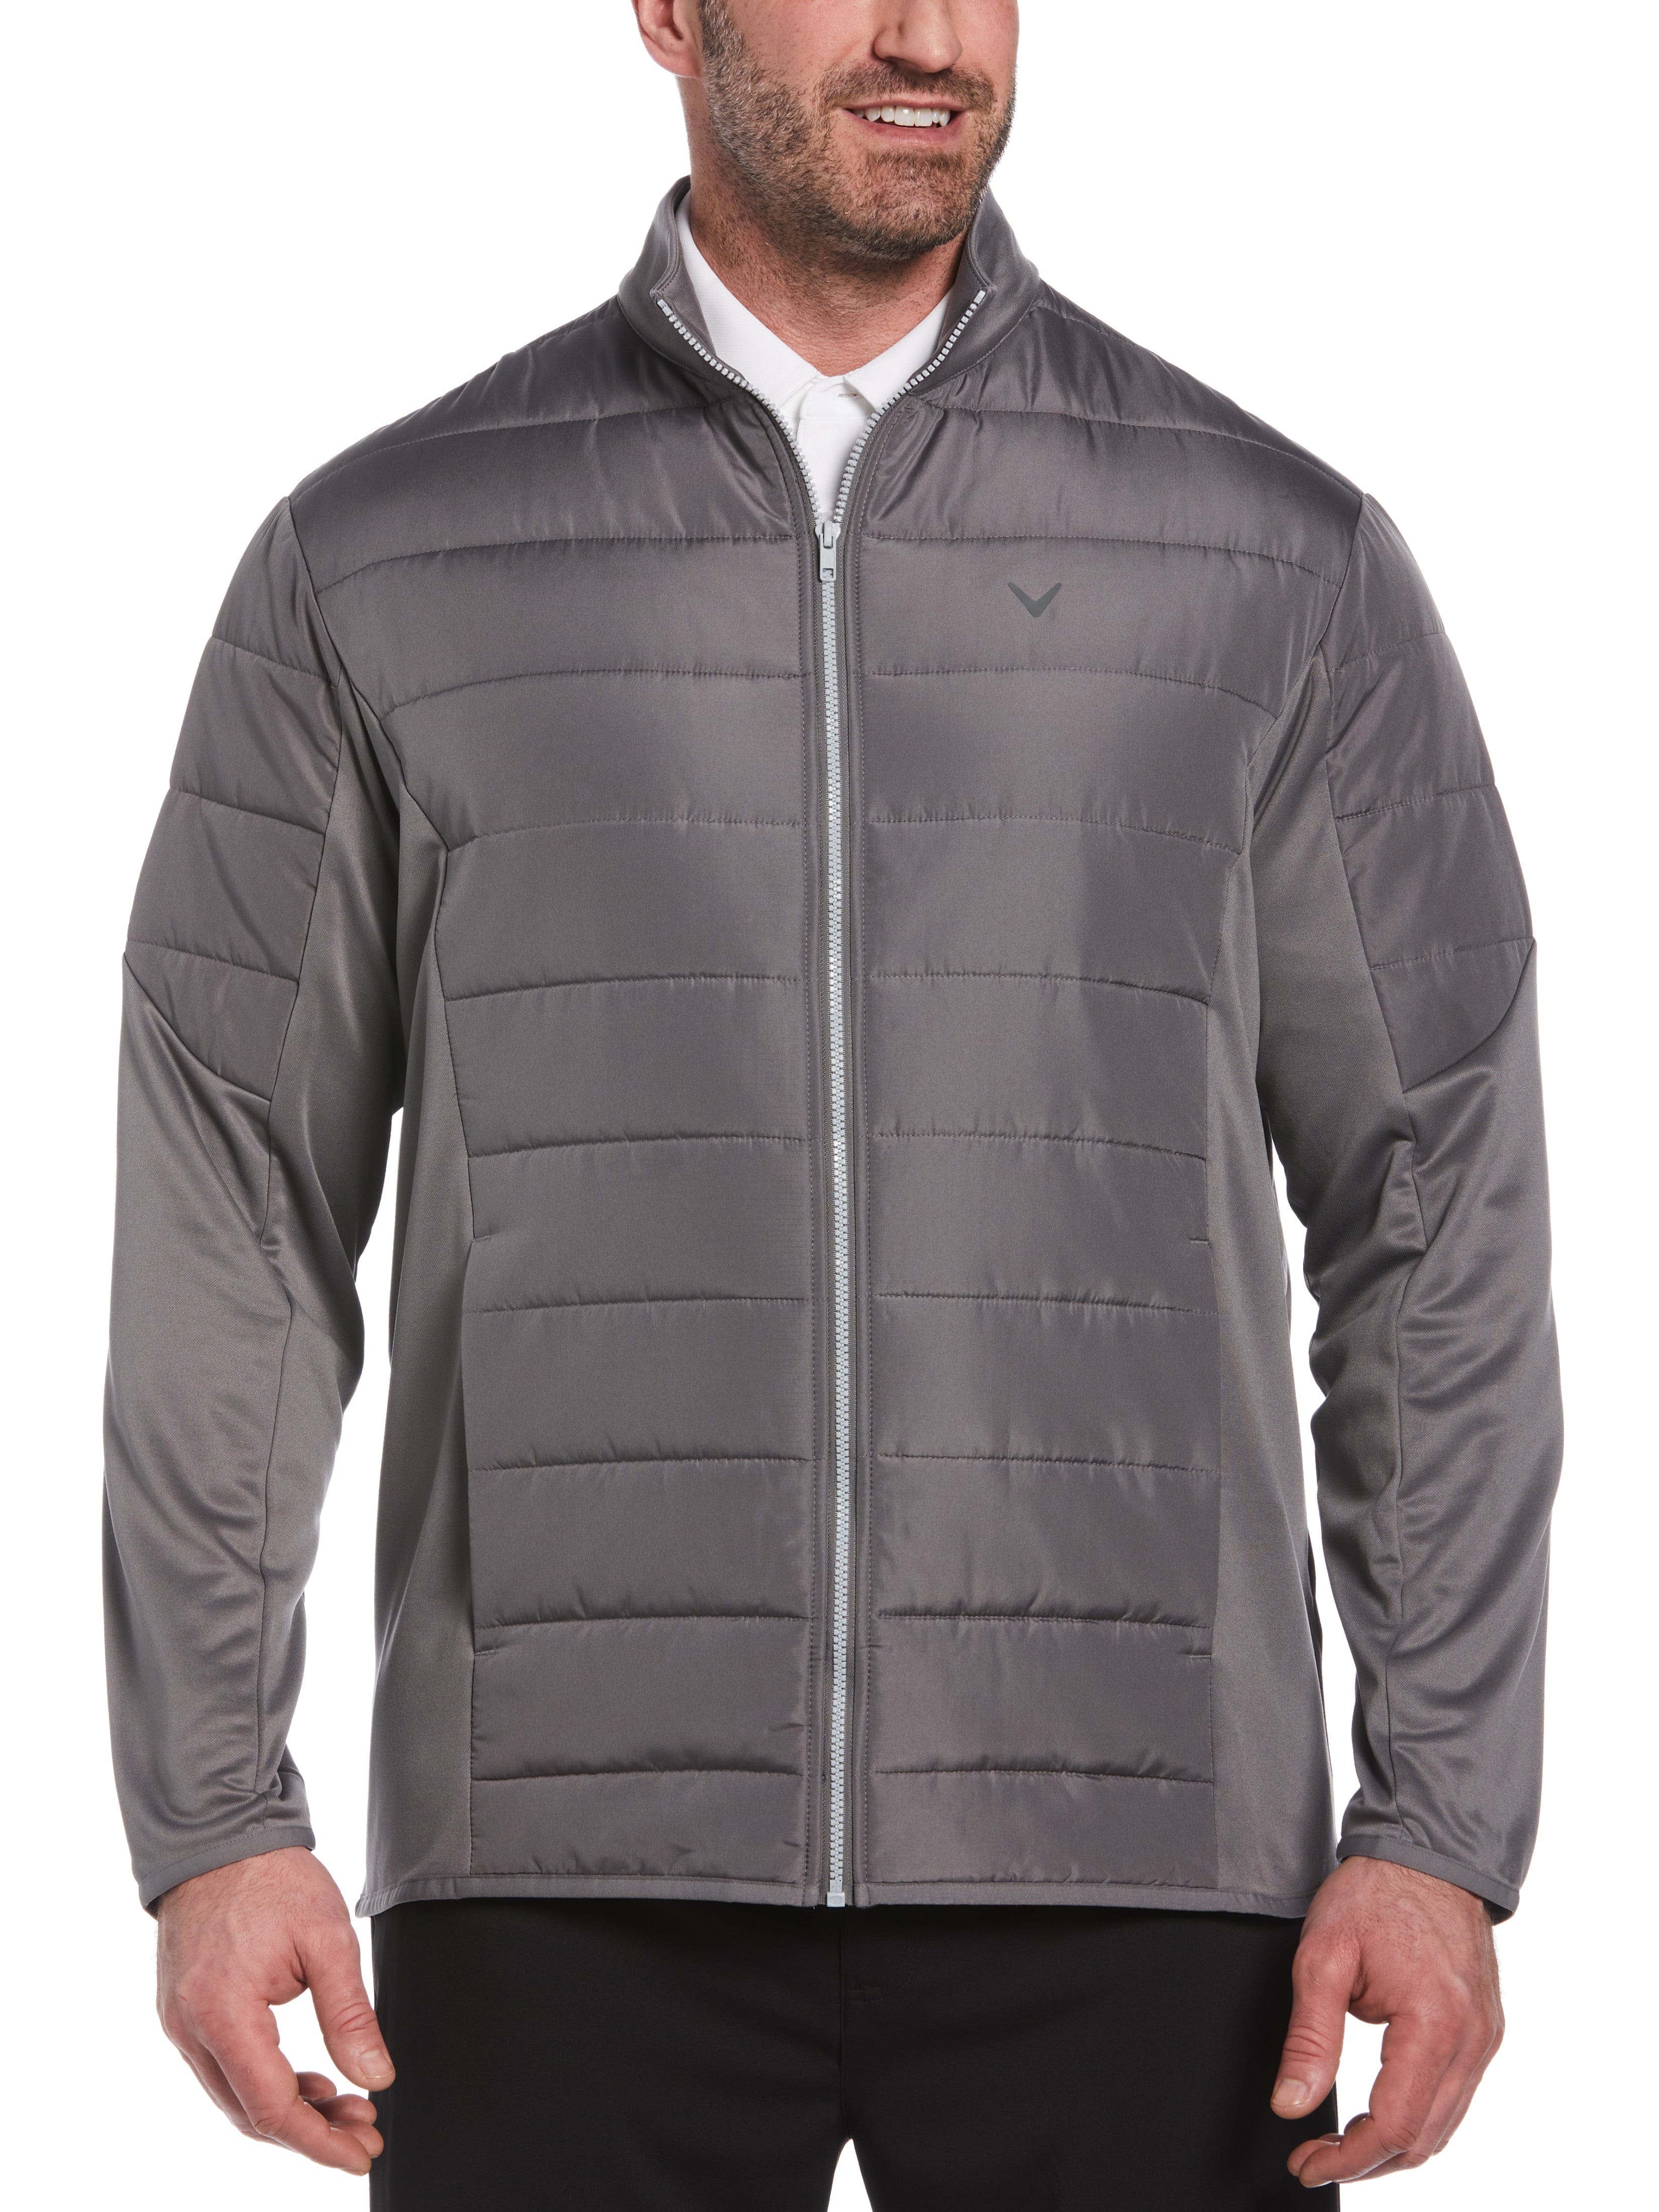 Callaway Apparel Mens Big & Tall Hybrid Performance Puffer Jacket Top, Size 4X, Quiet Shade Gray, 100% Polyester | Golf Apparel Shop